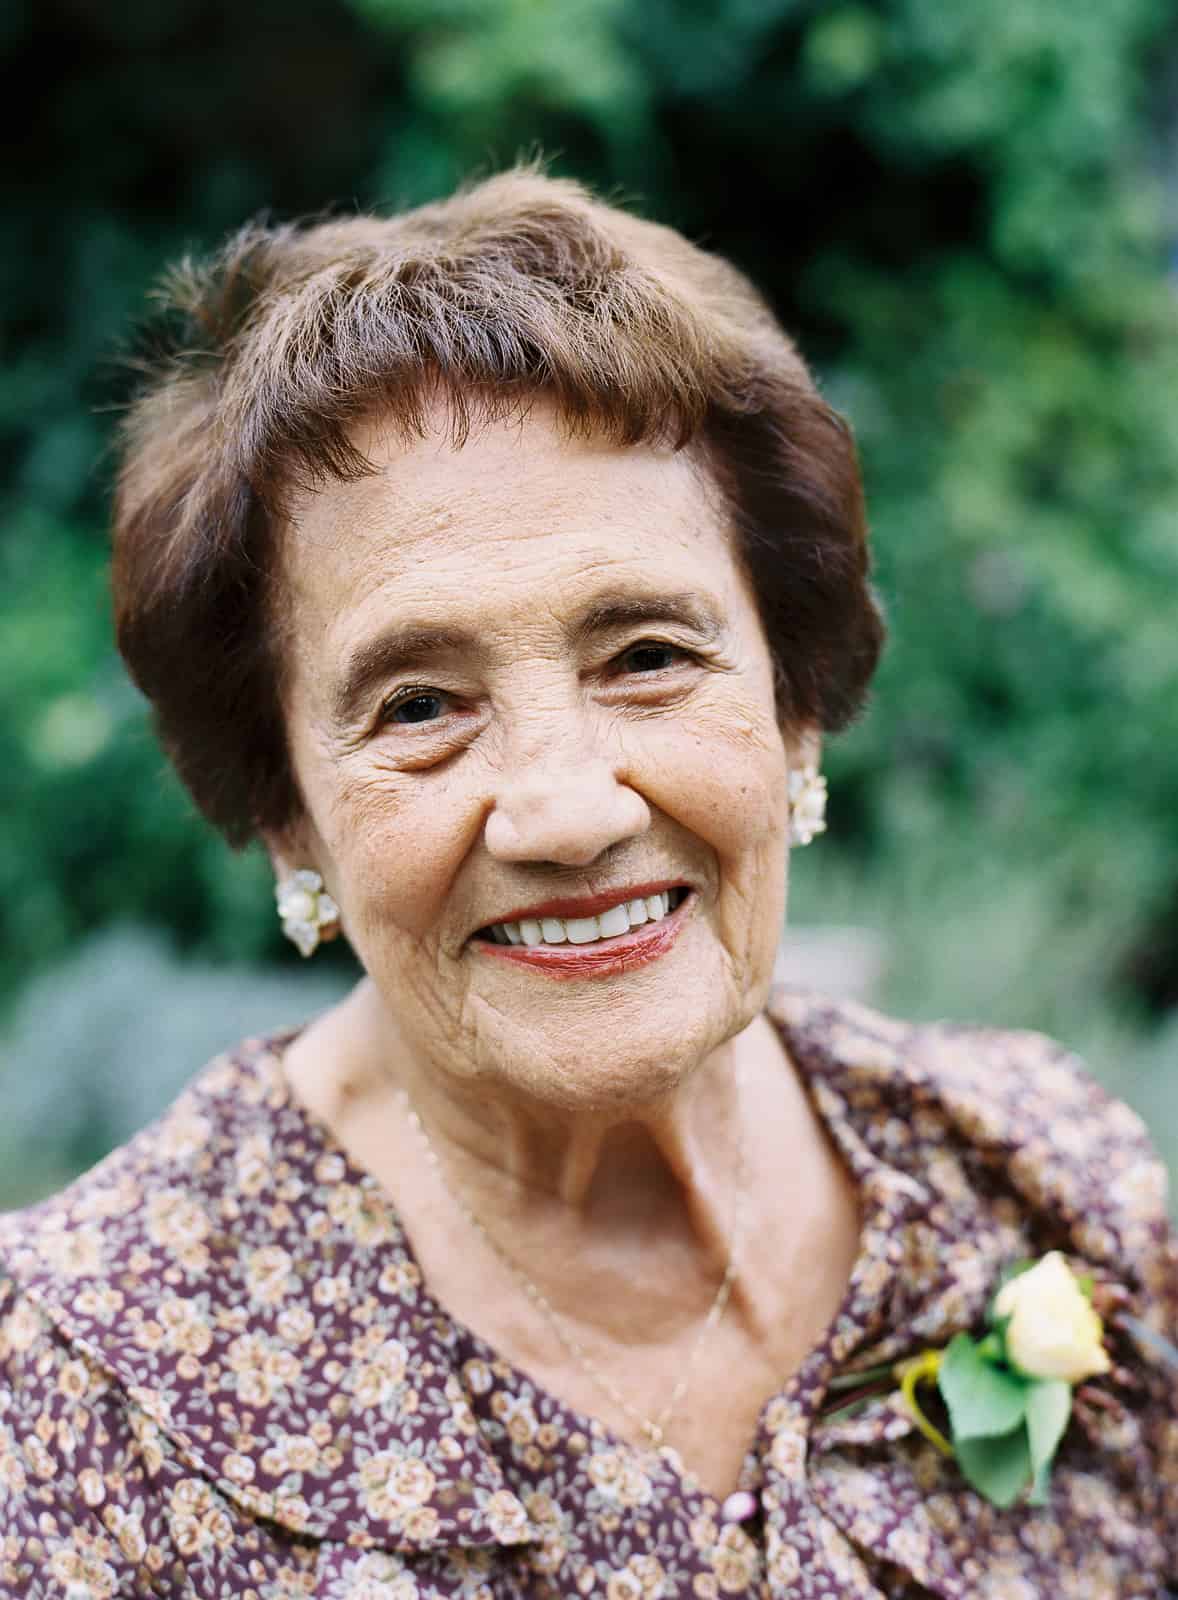 grandmother portrait